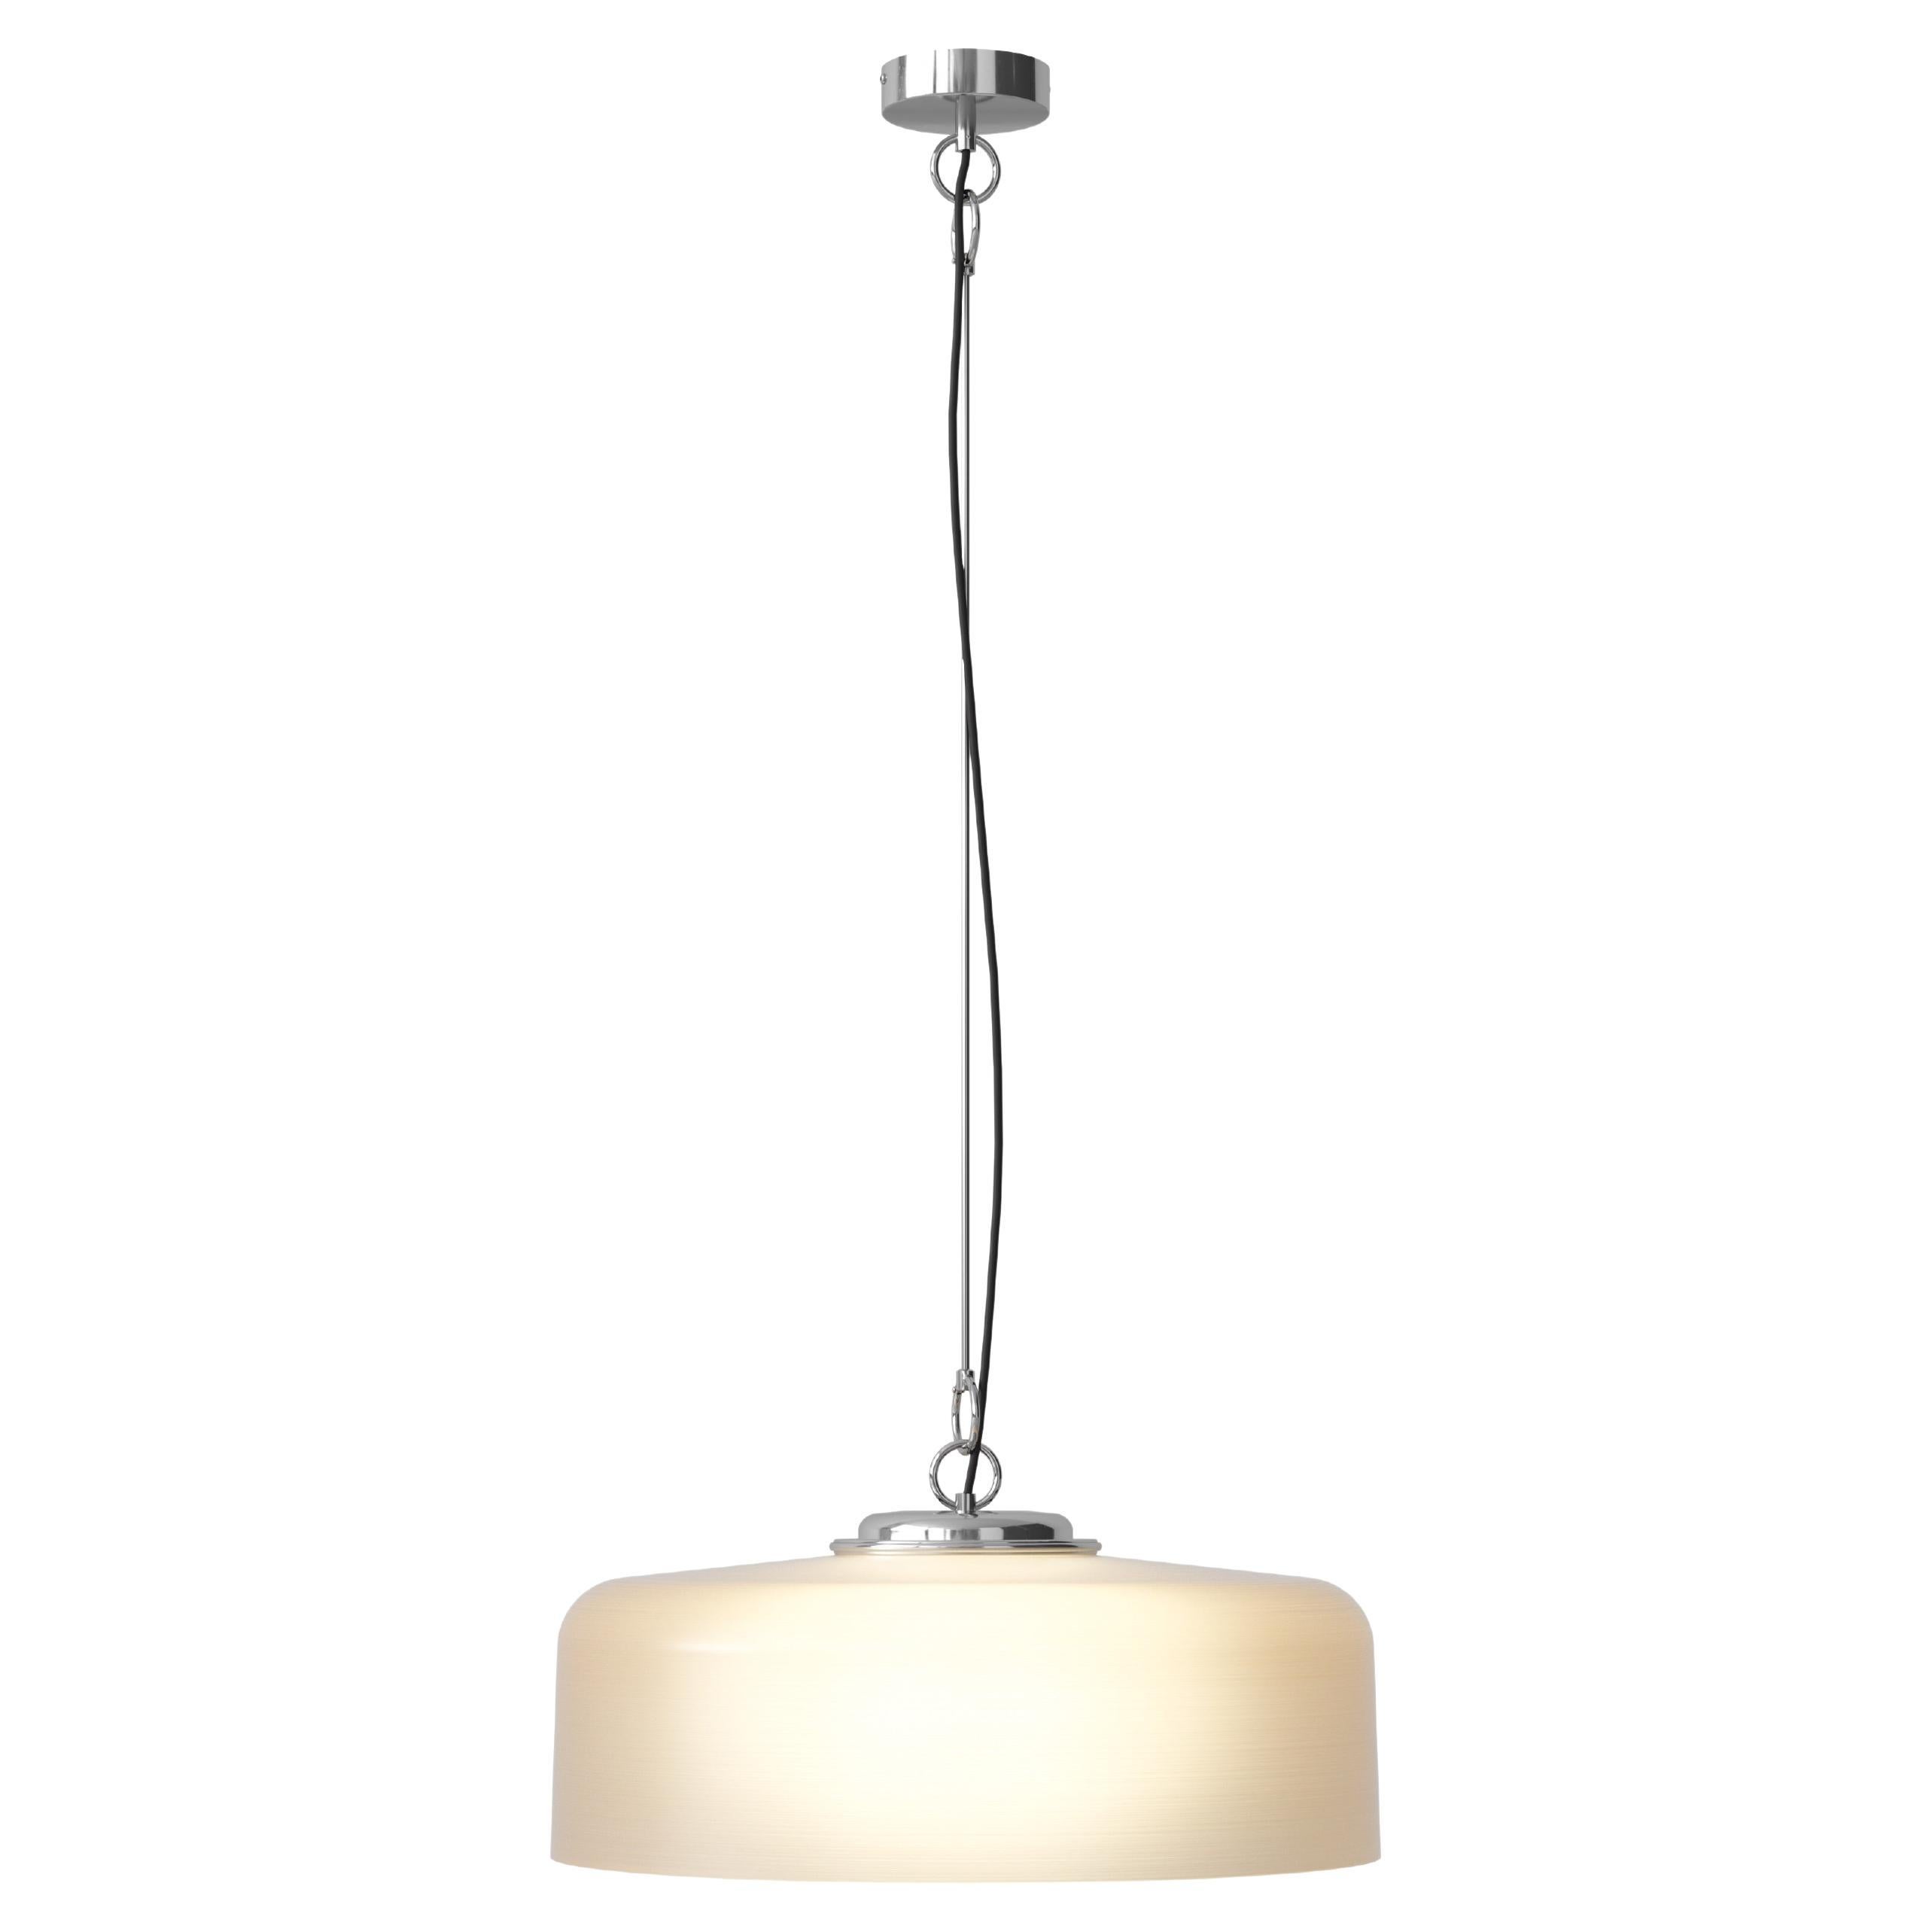 Franco Albini & Franca Helg 'Model 2050' Suspension Lamp in Pearl for Astep  For Sale 10